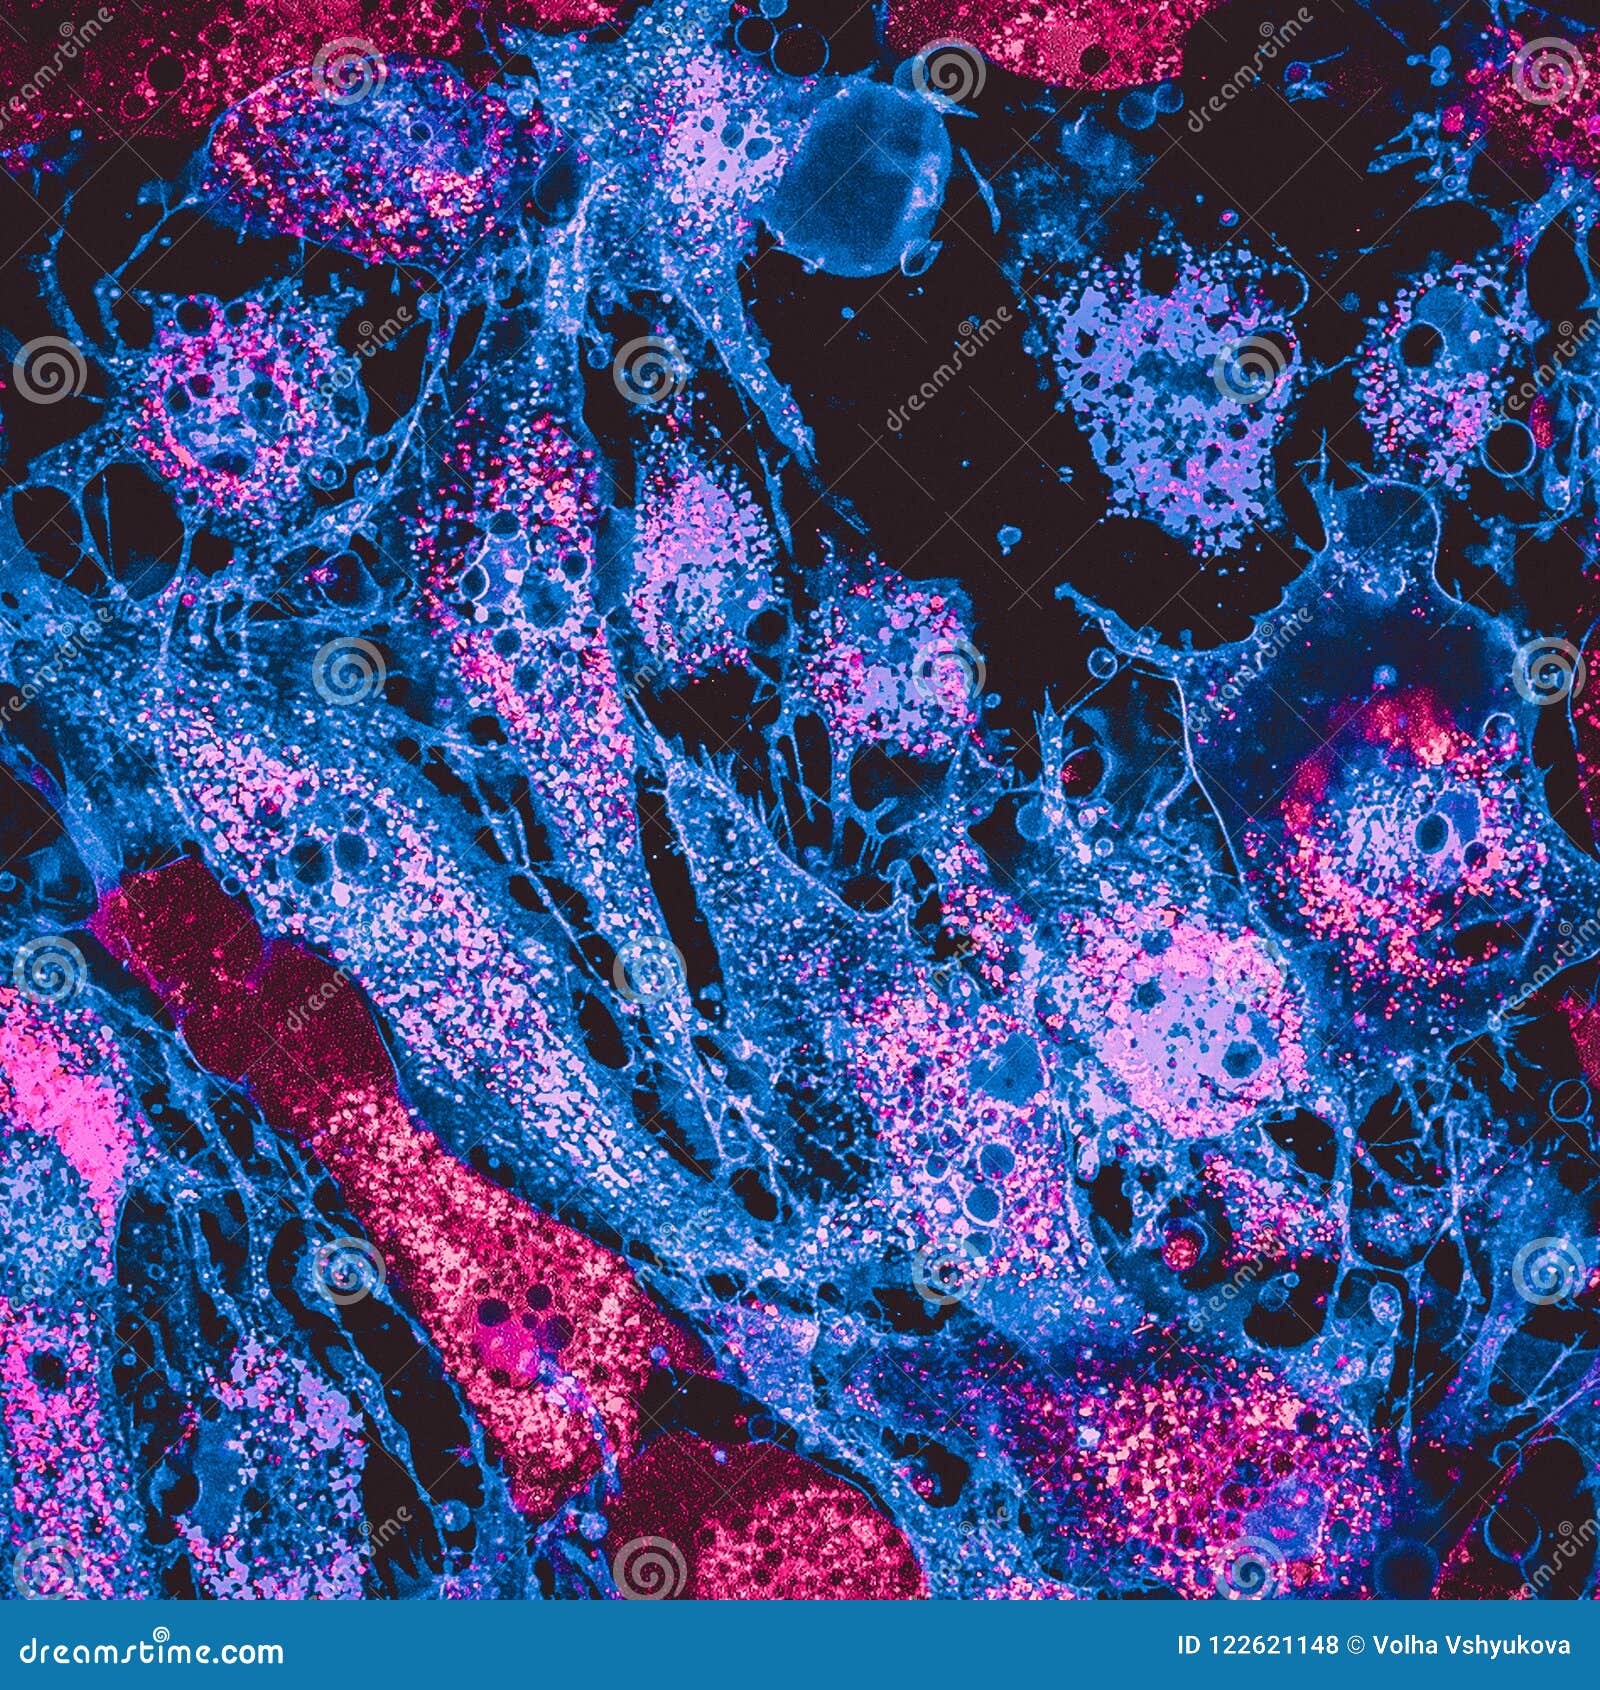 confocal image of mitochondria